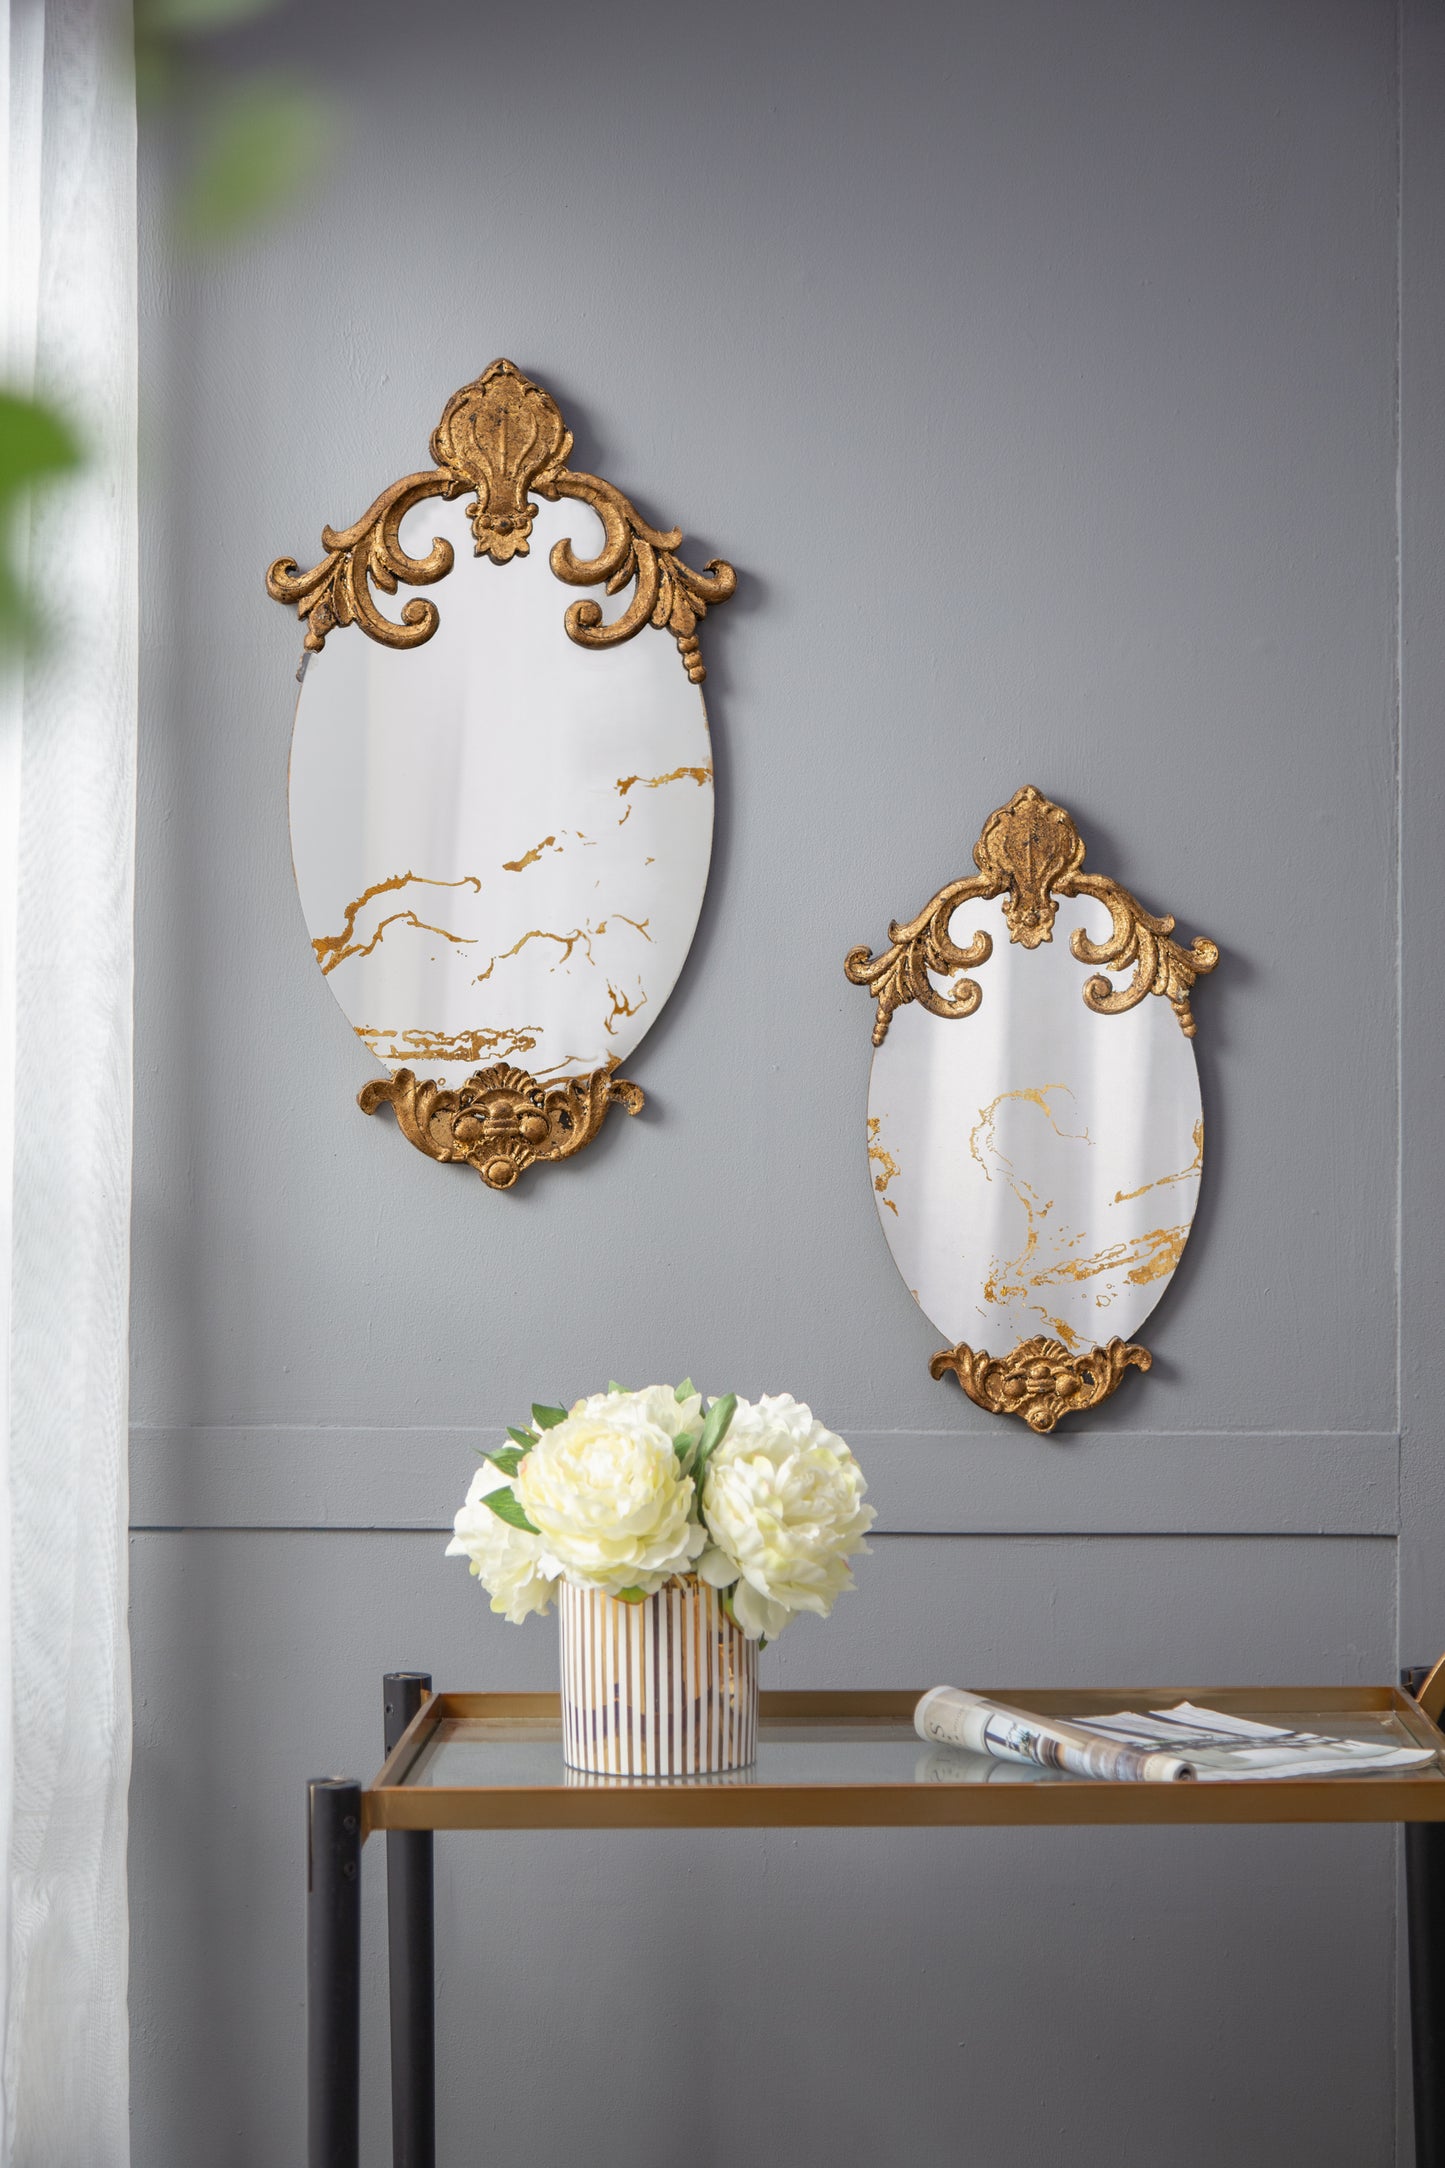 20" x 12" Decorative Oval Wall Mirror